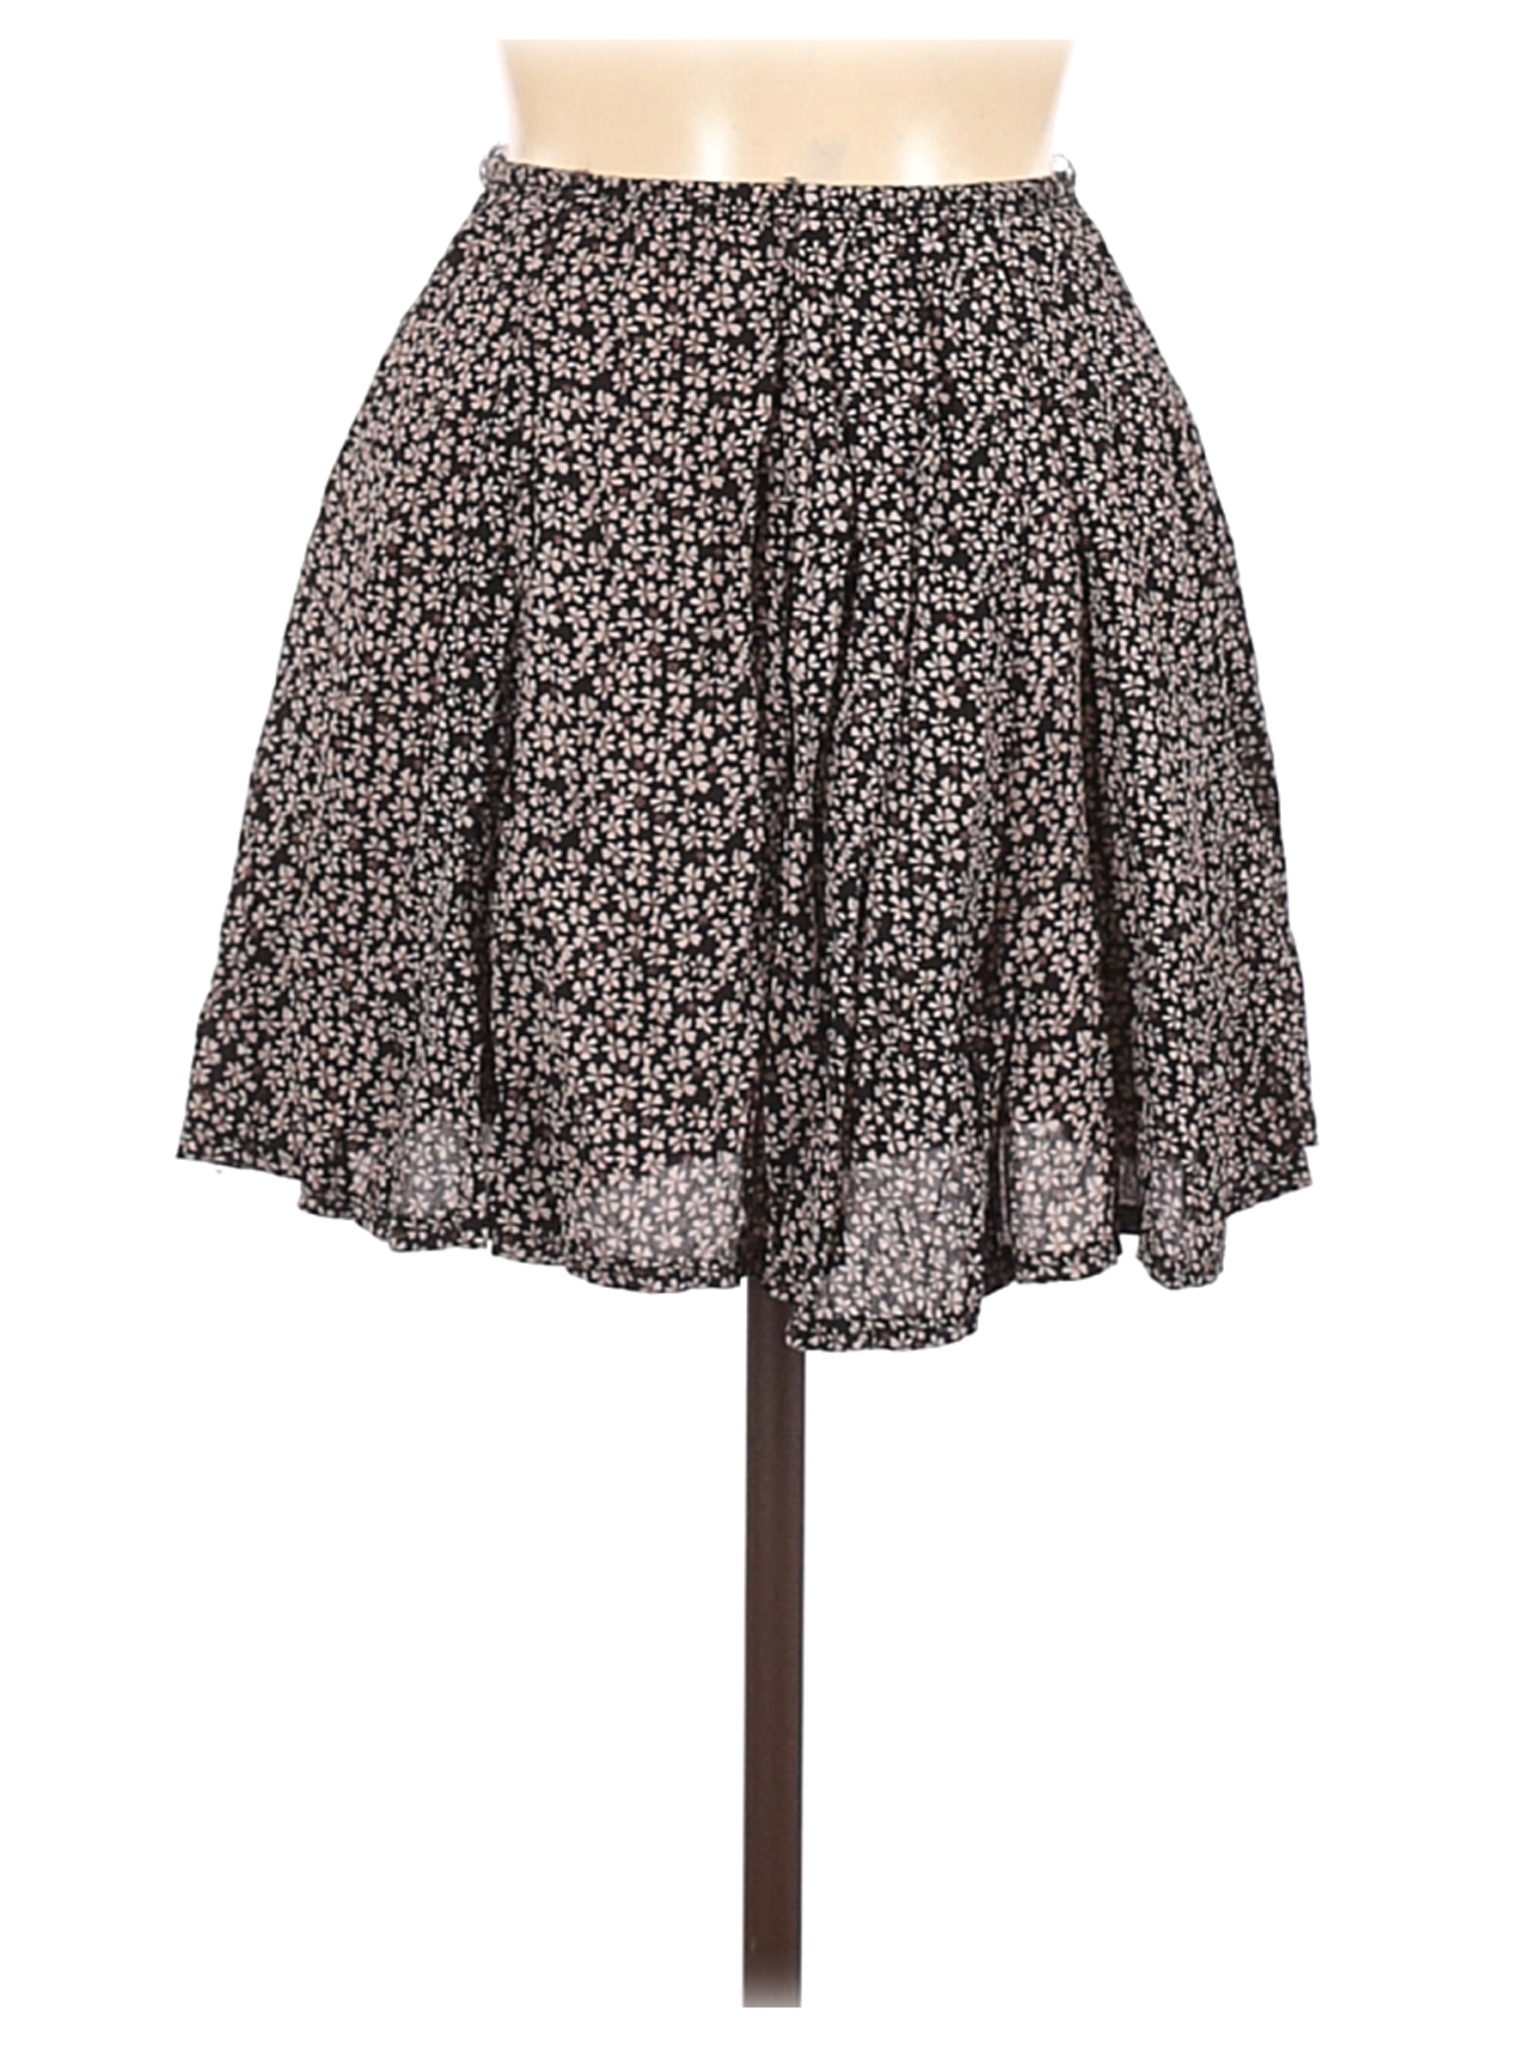 Brandy Melville Women Black Casual Skirt One Size | eBay